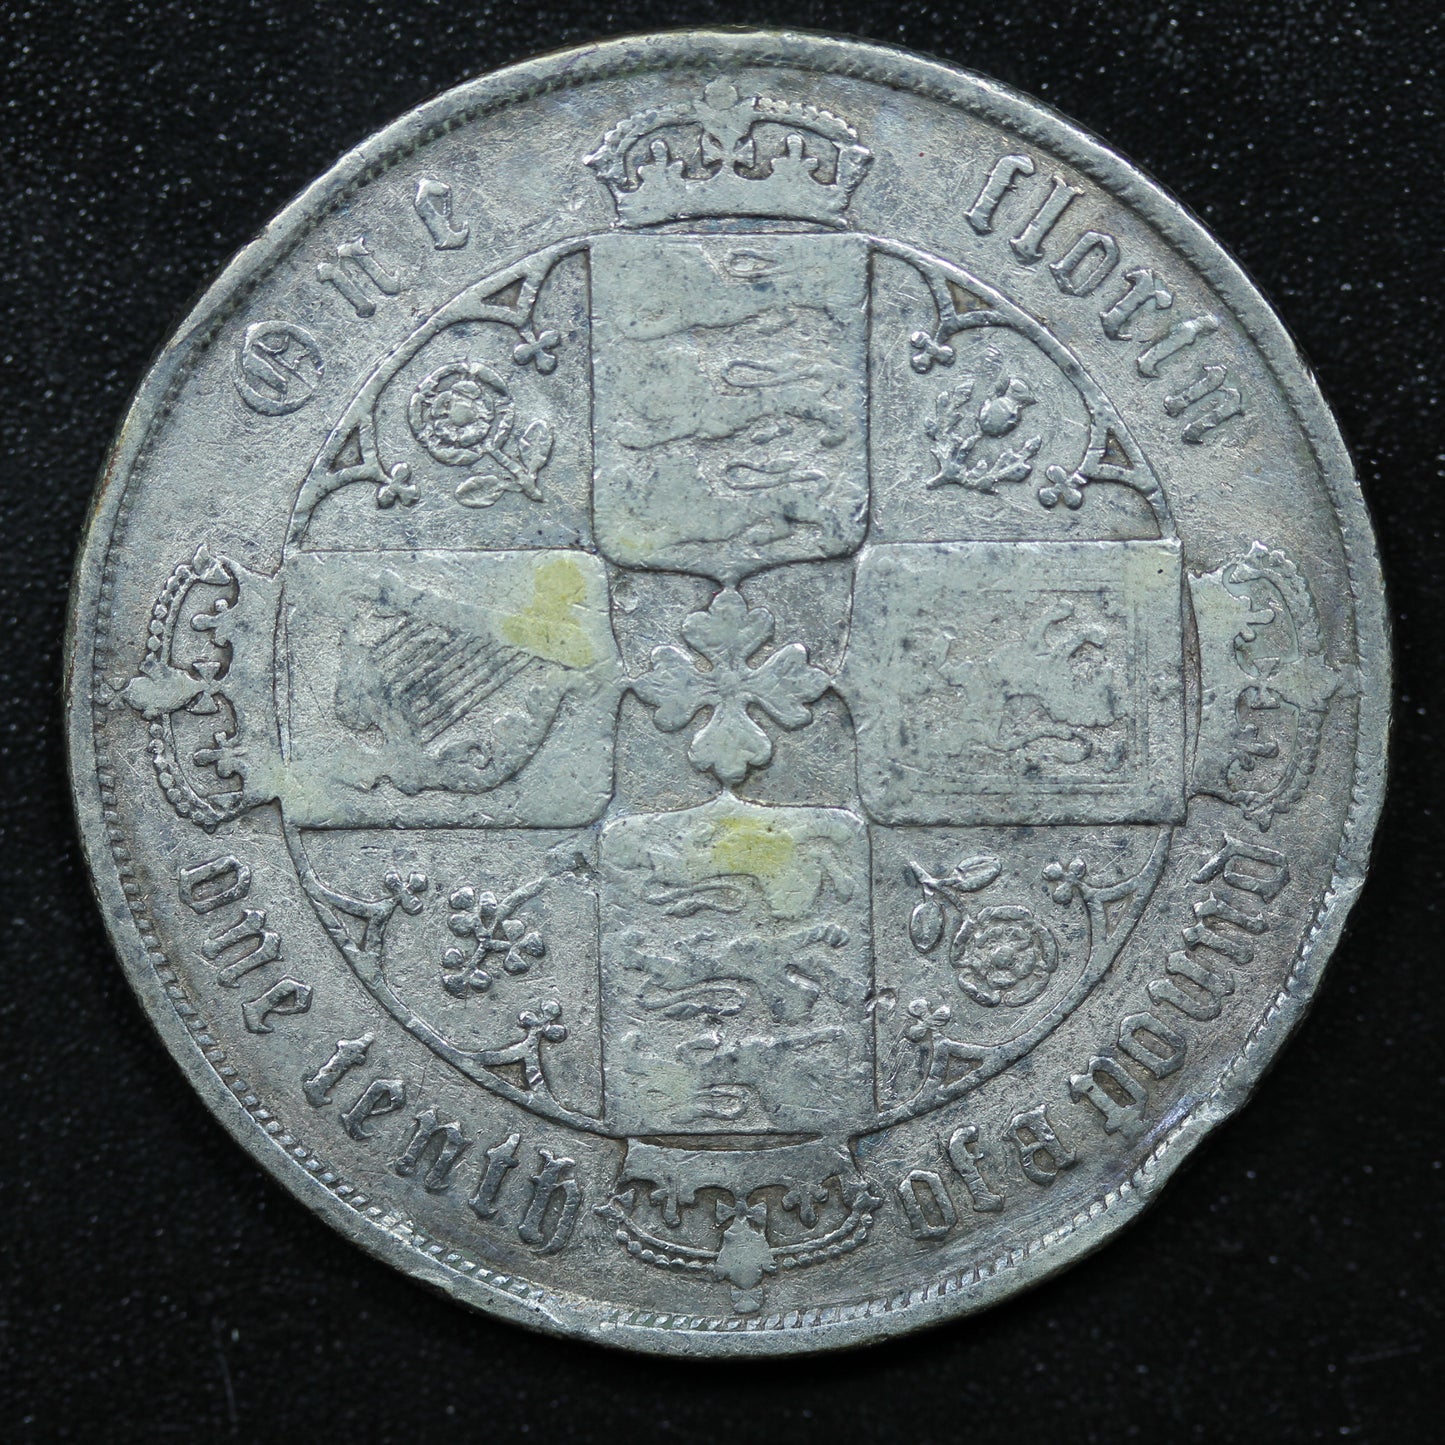 1879 Great Britain 1 One Florin Silver Coin - Victoria - KM# 746.4